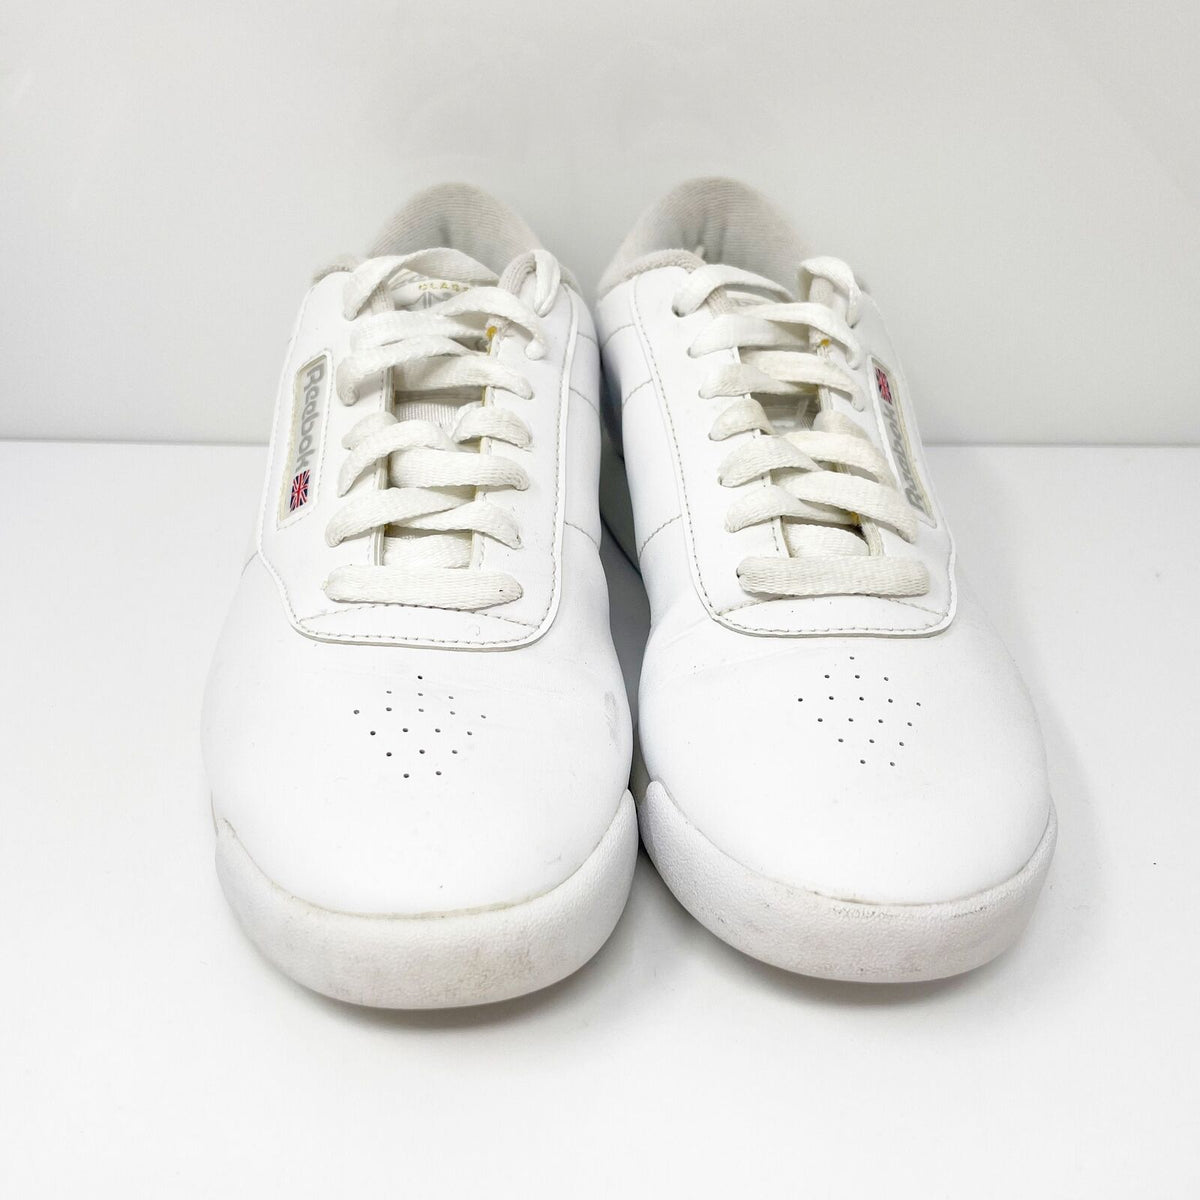 Reebok Womens Princess 1475 White Casual Shoes Sneakers Size 8 ...